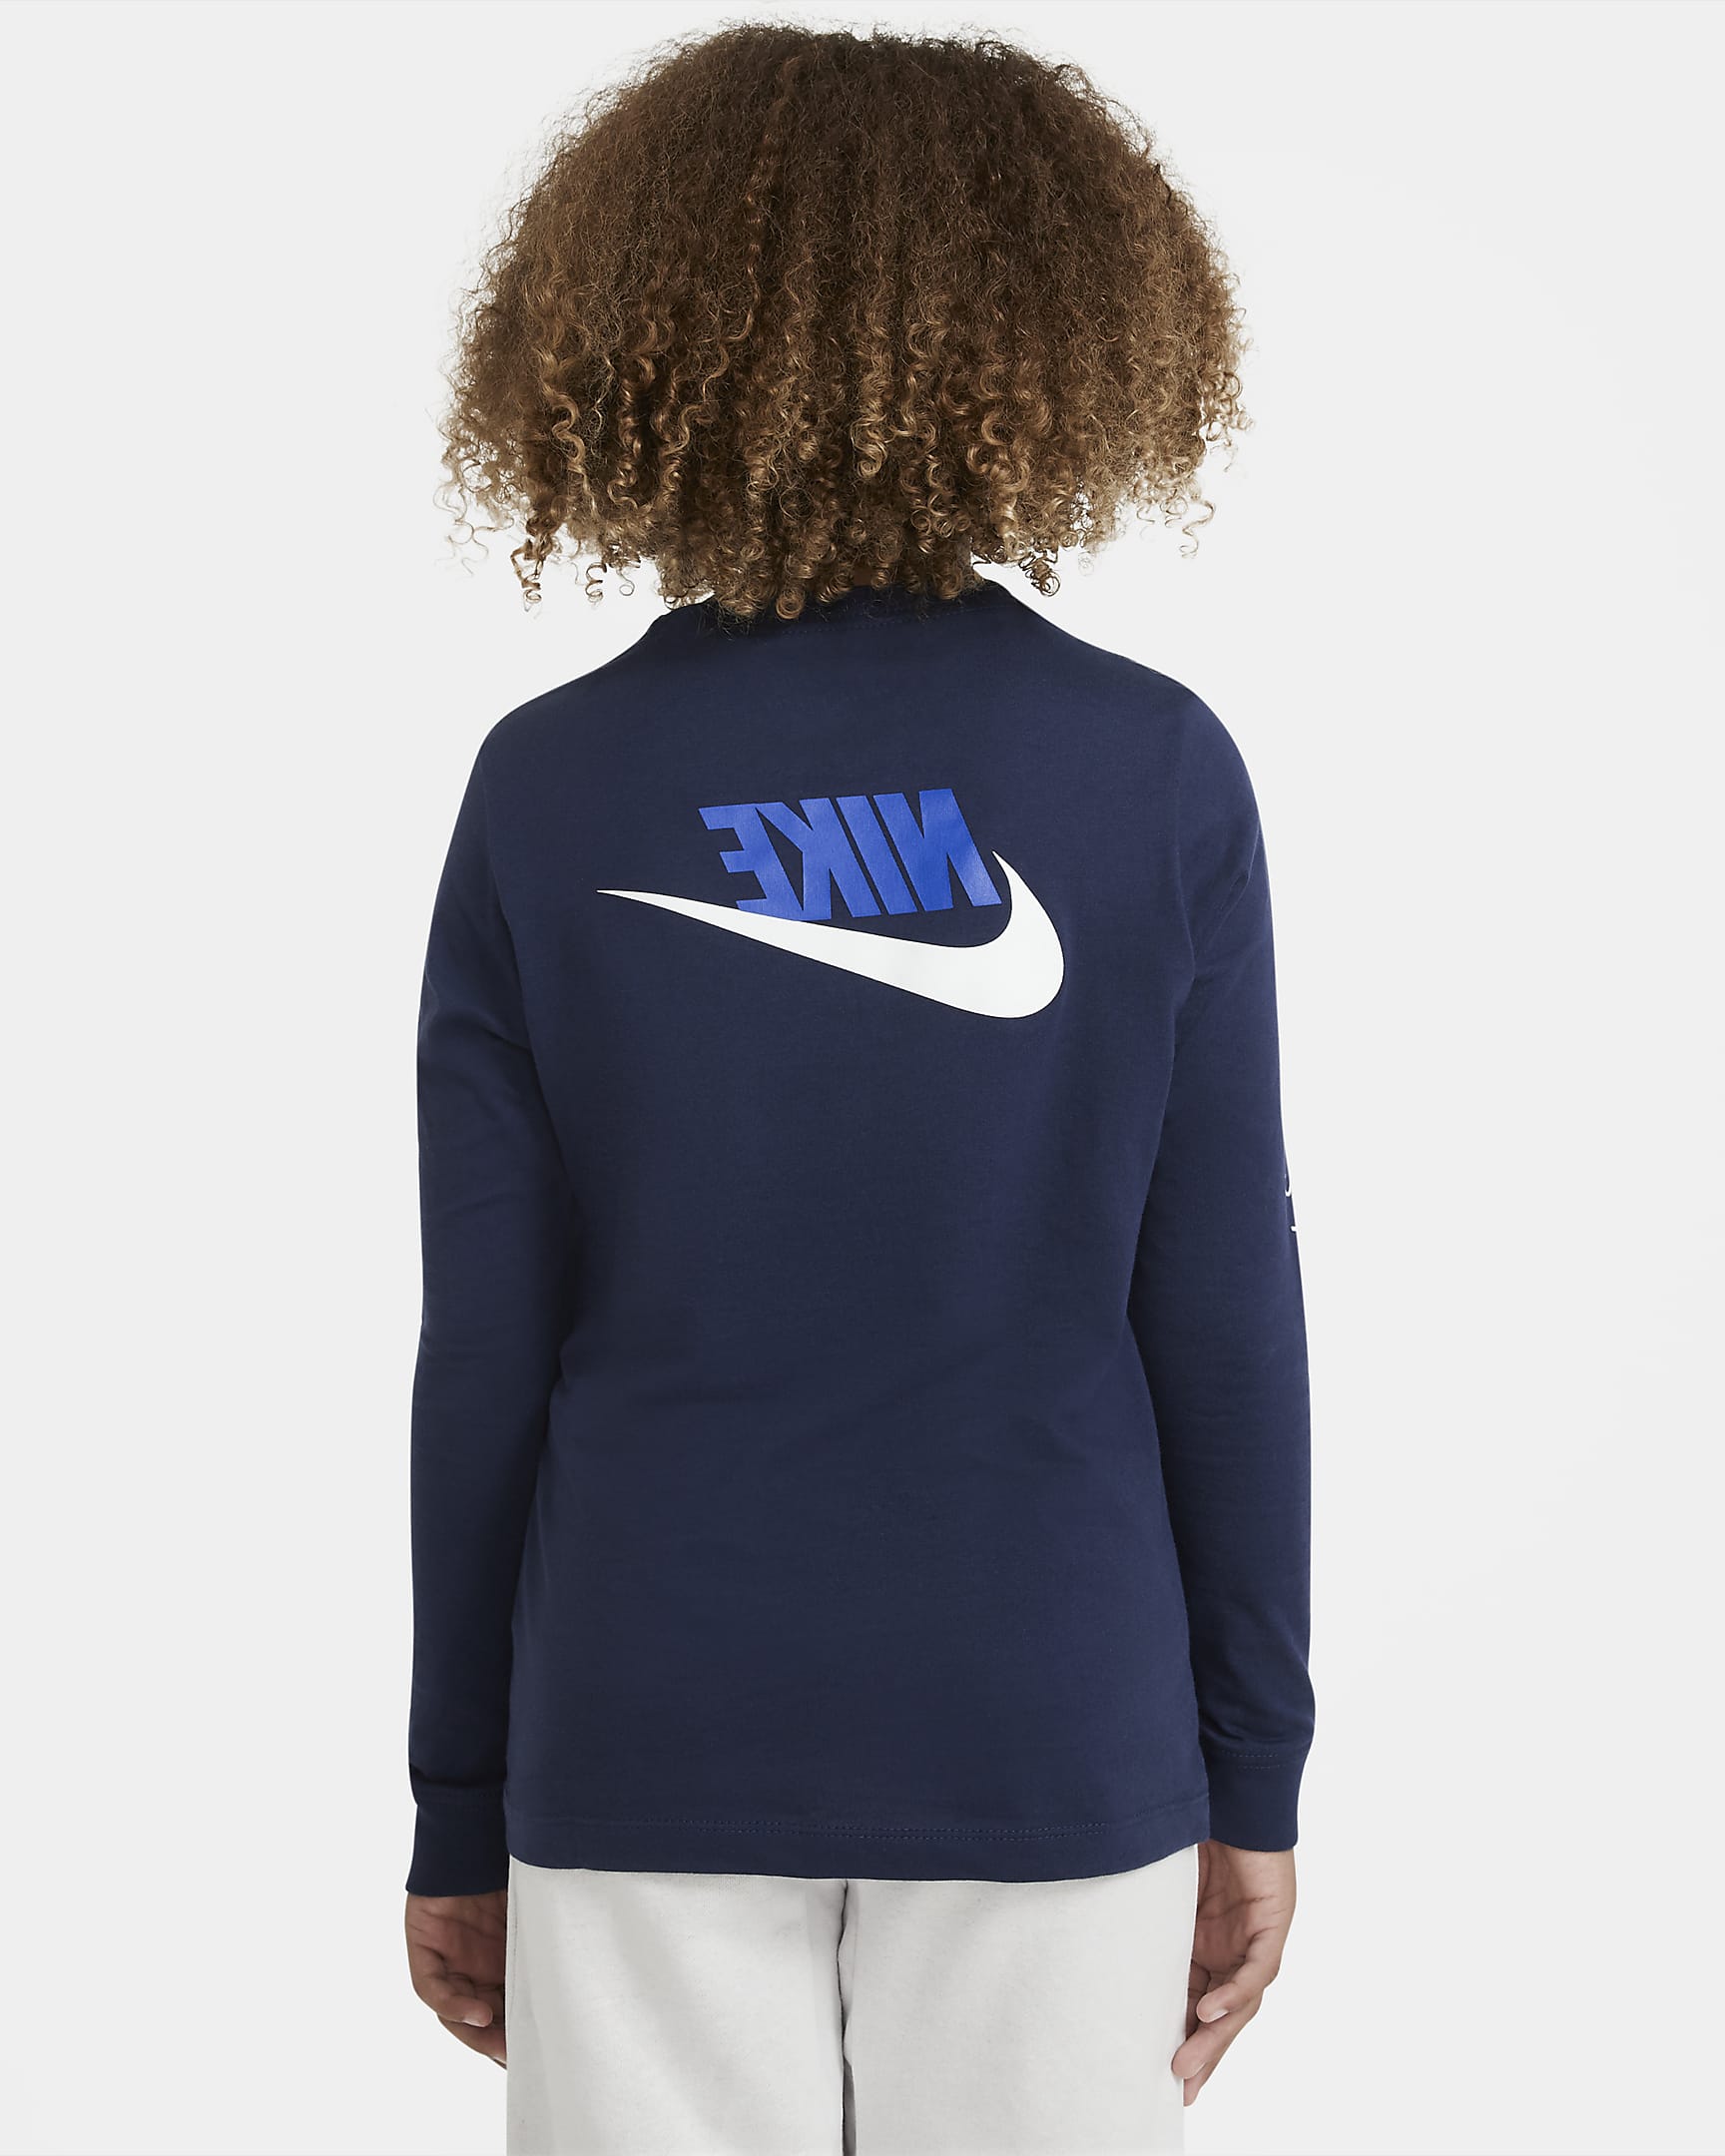 Nike Sportswear Big Kids’ (Boys’) Long-Sleeve T-Shirt. Nike.com